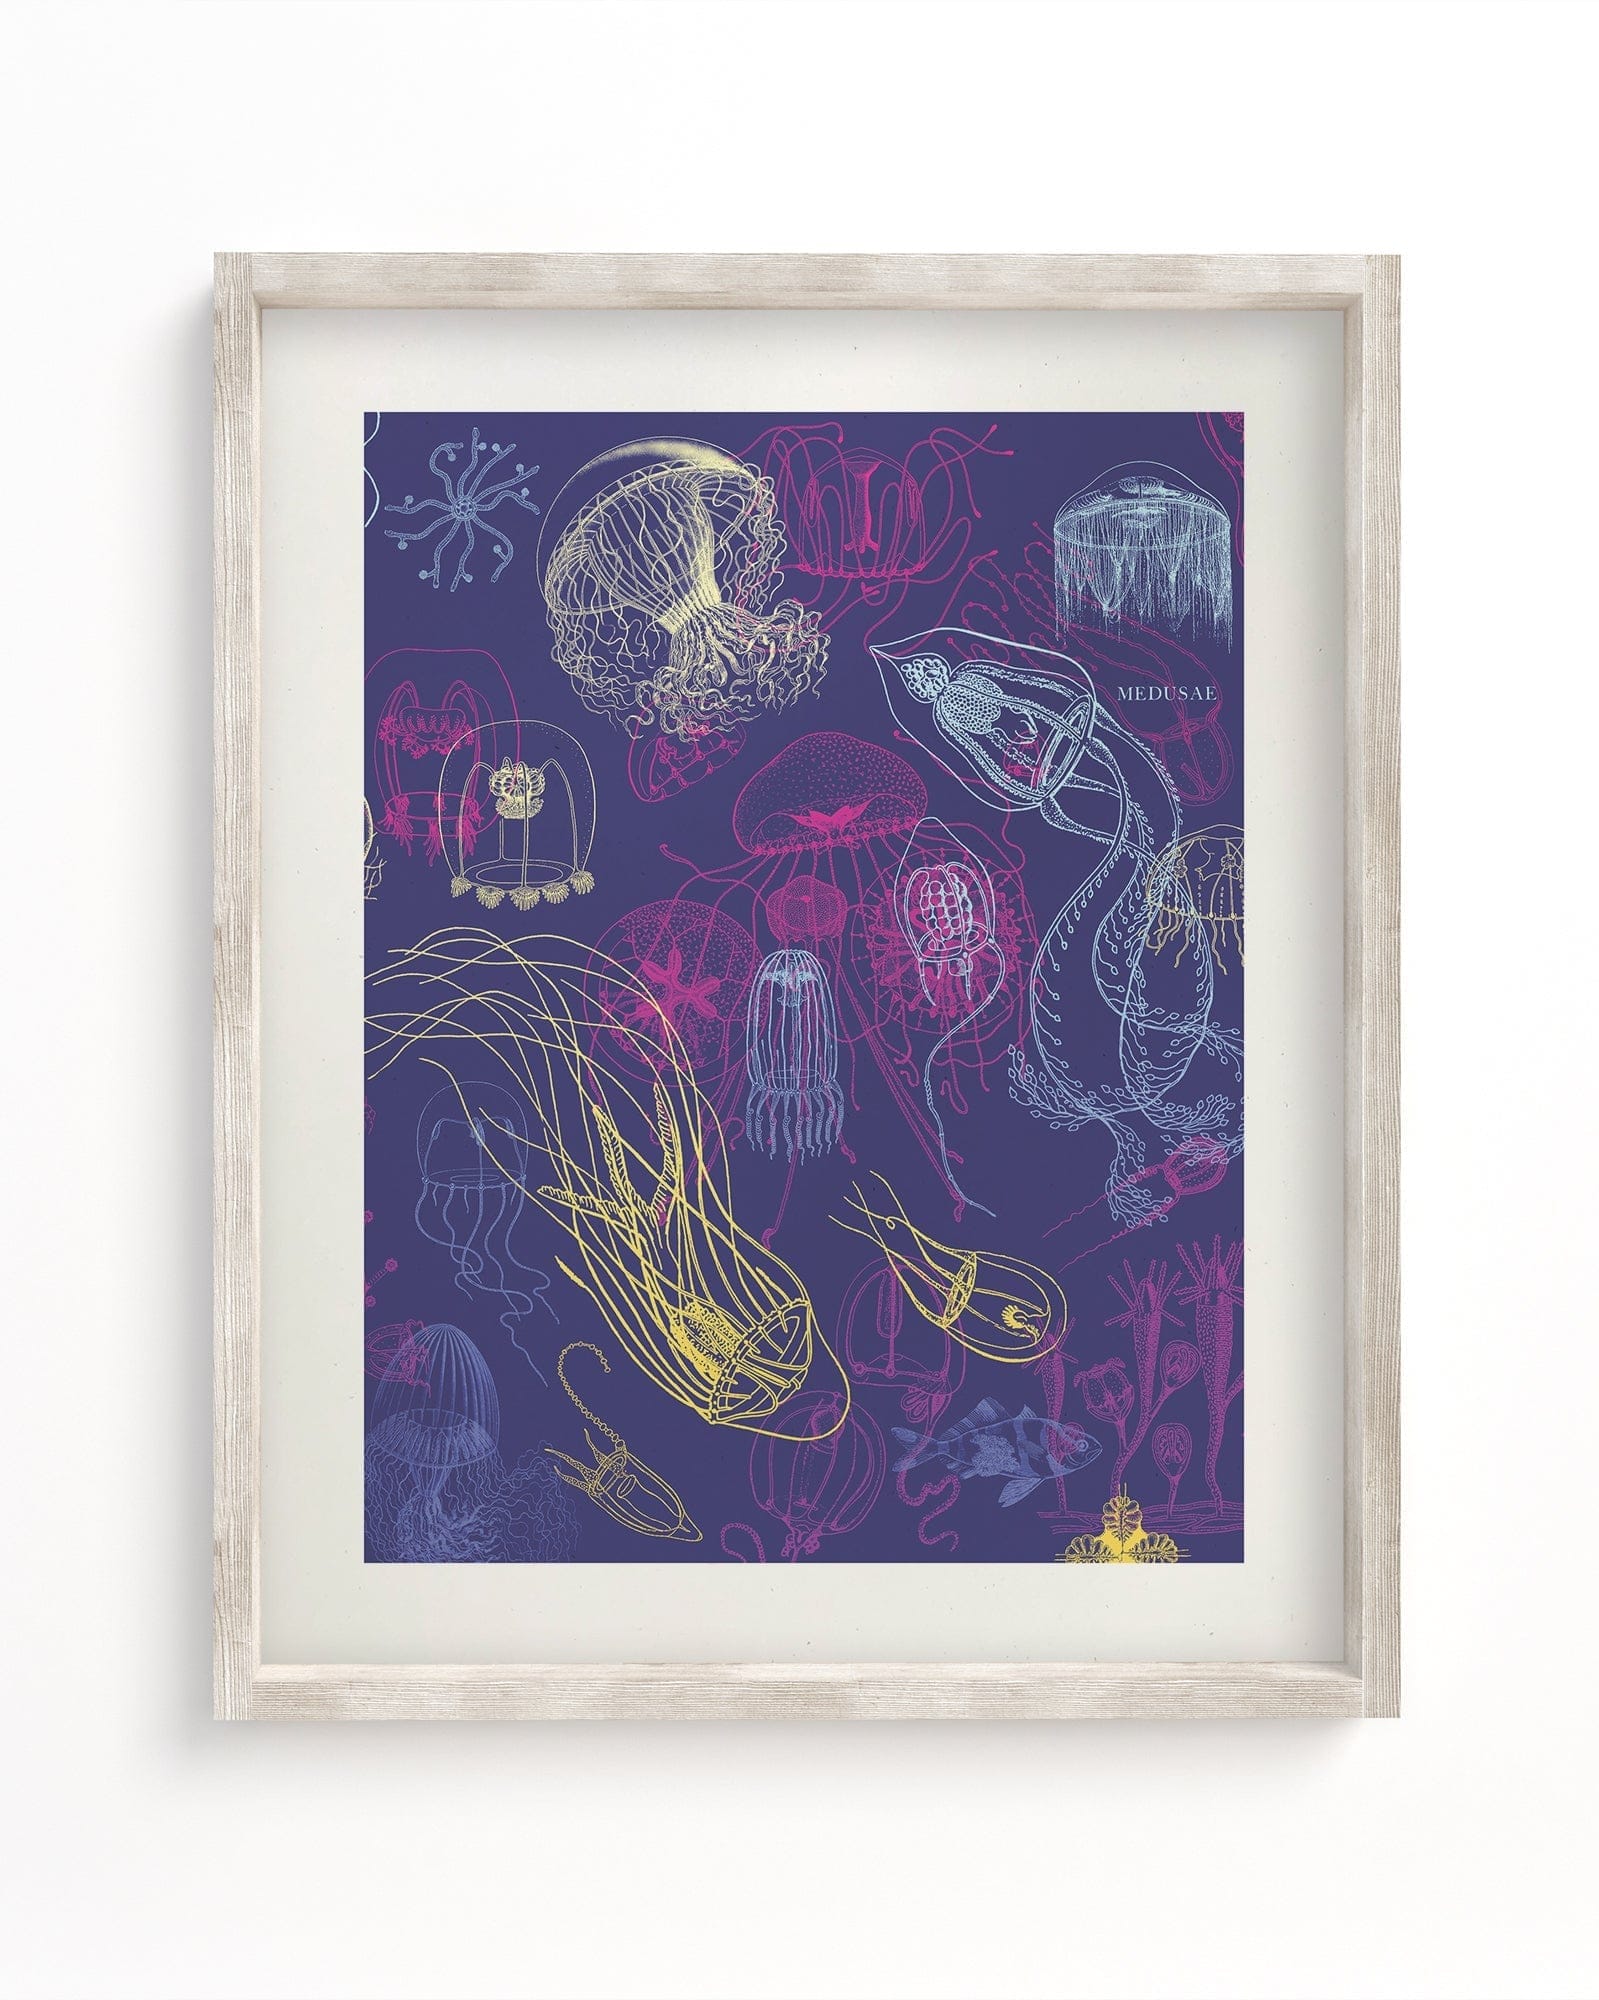 Jellyfish Museum Print Cognitive Surplus